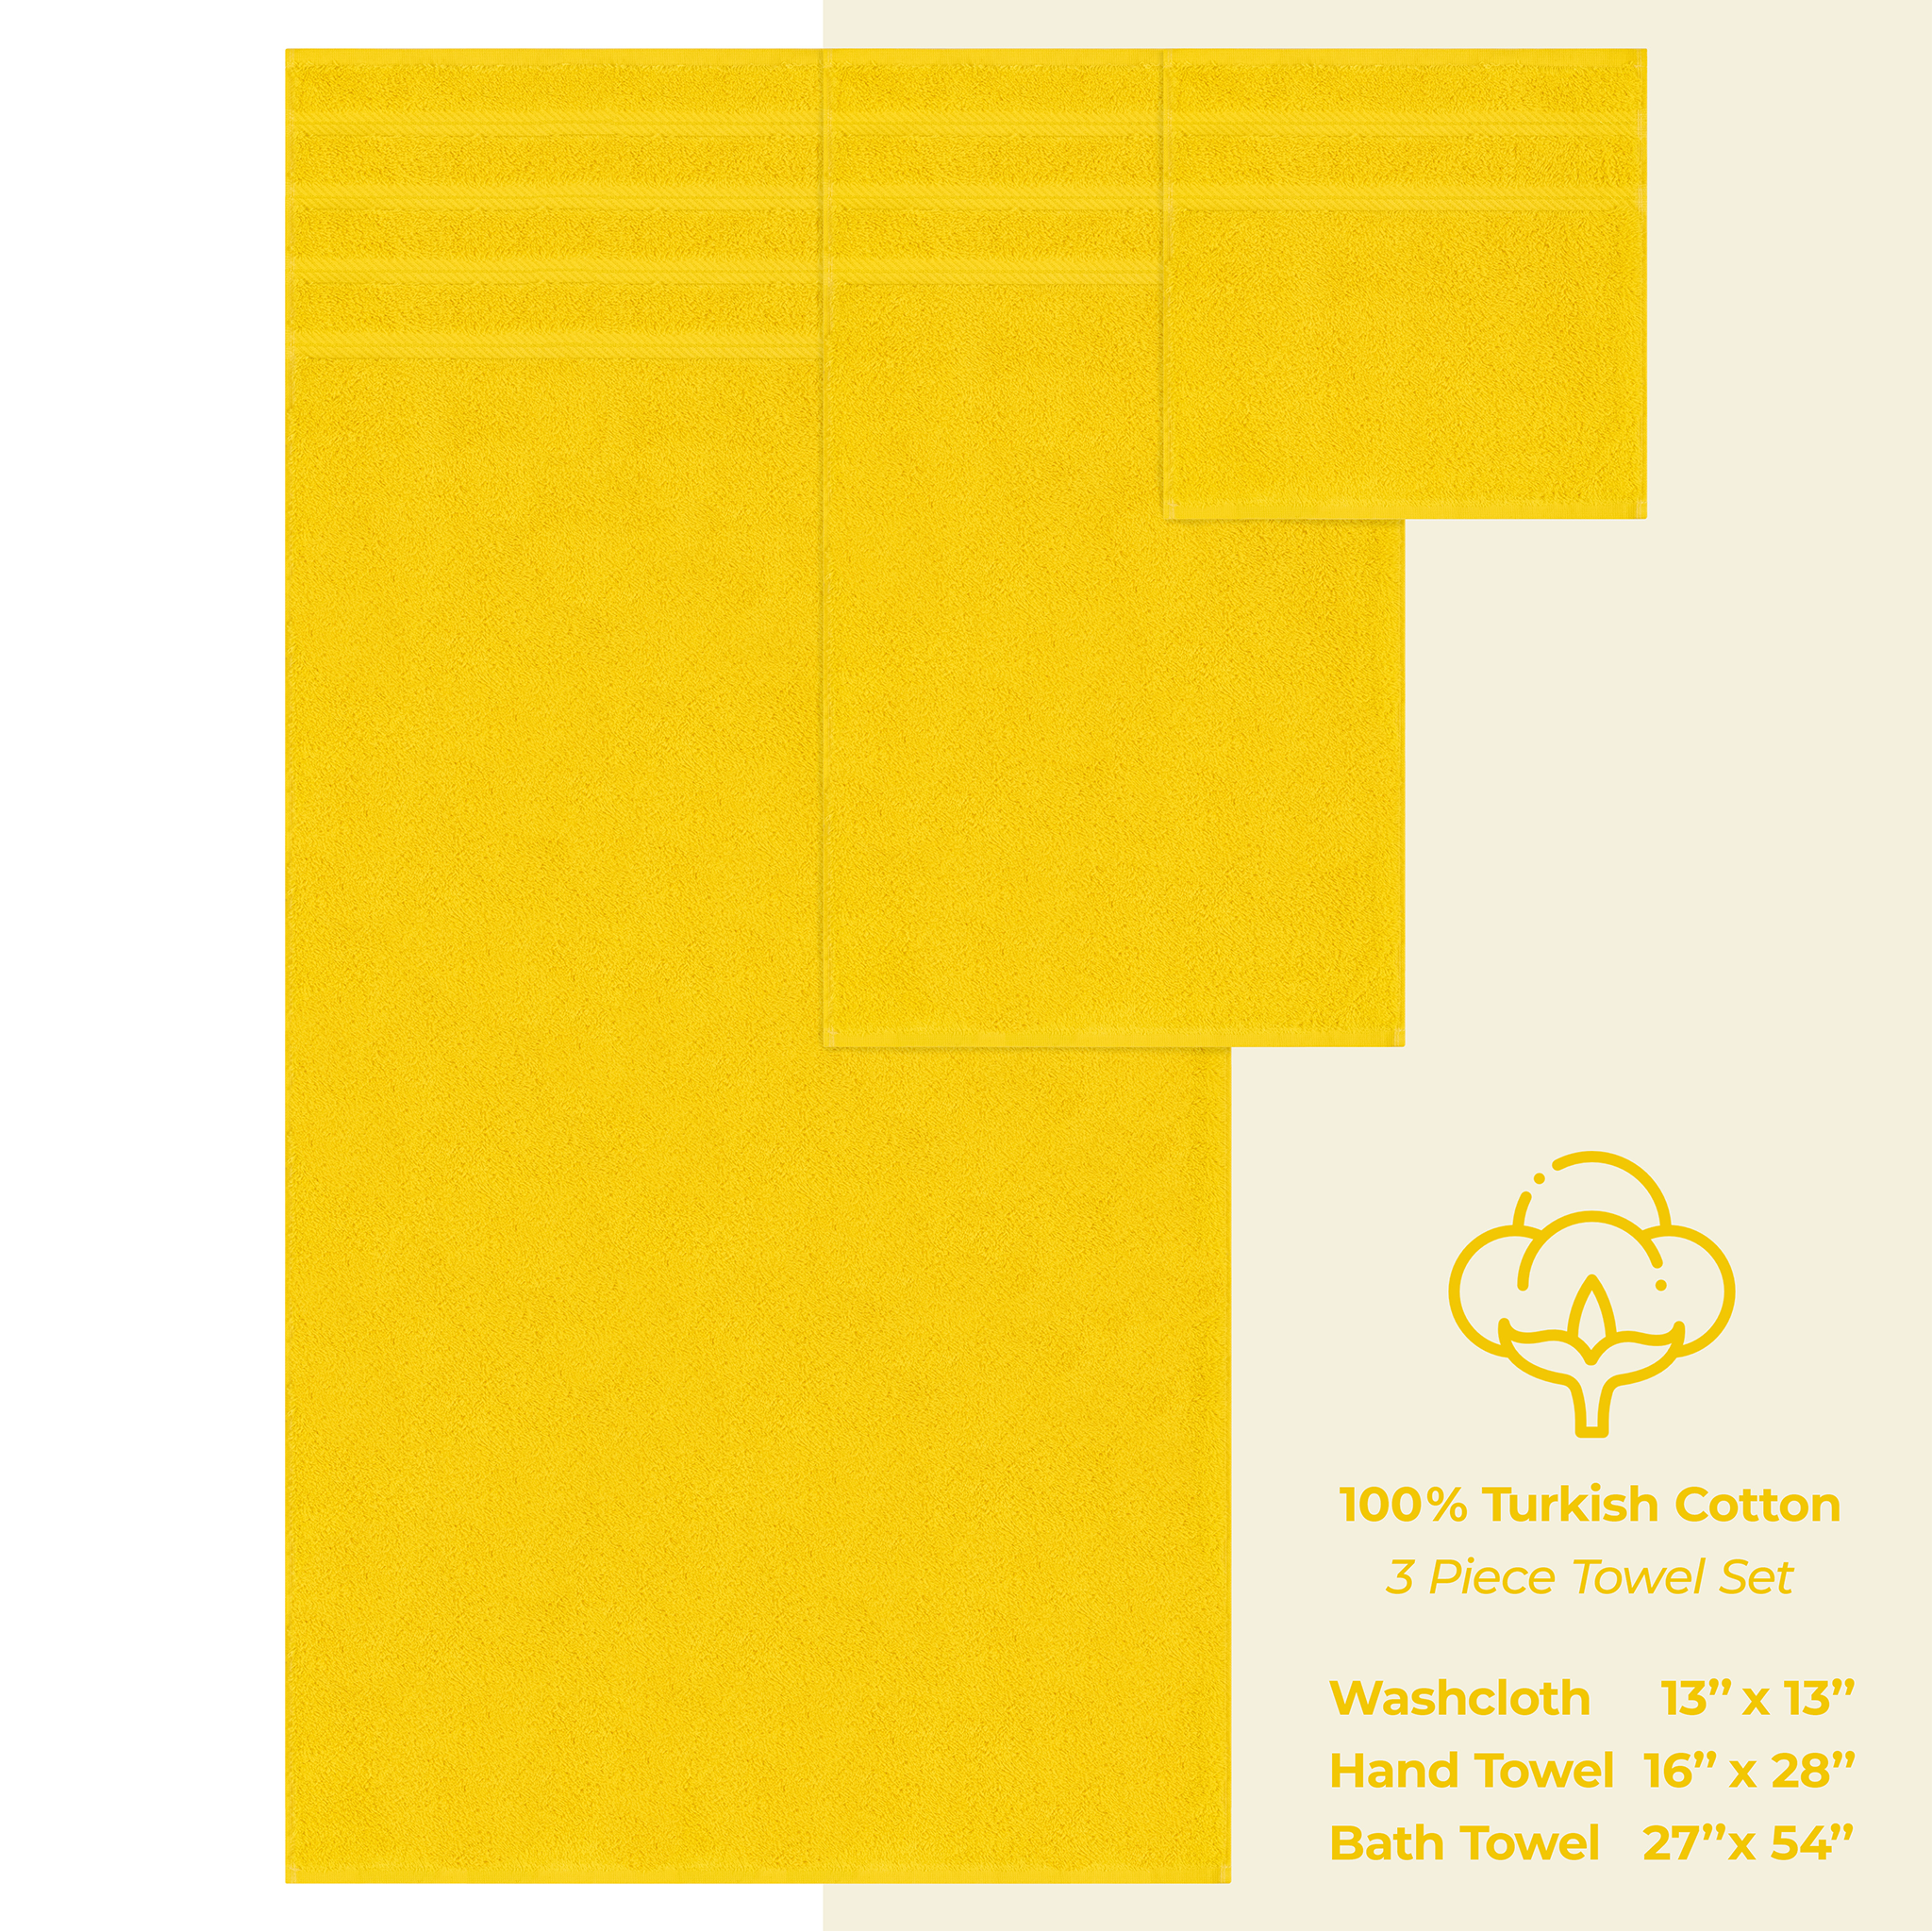 American Soft Linen - 3 Piece Turkish Cotton Towel Set - Yellow - 4